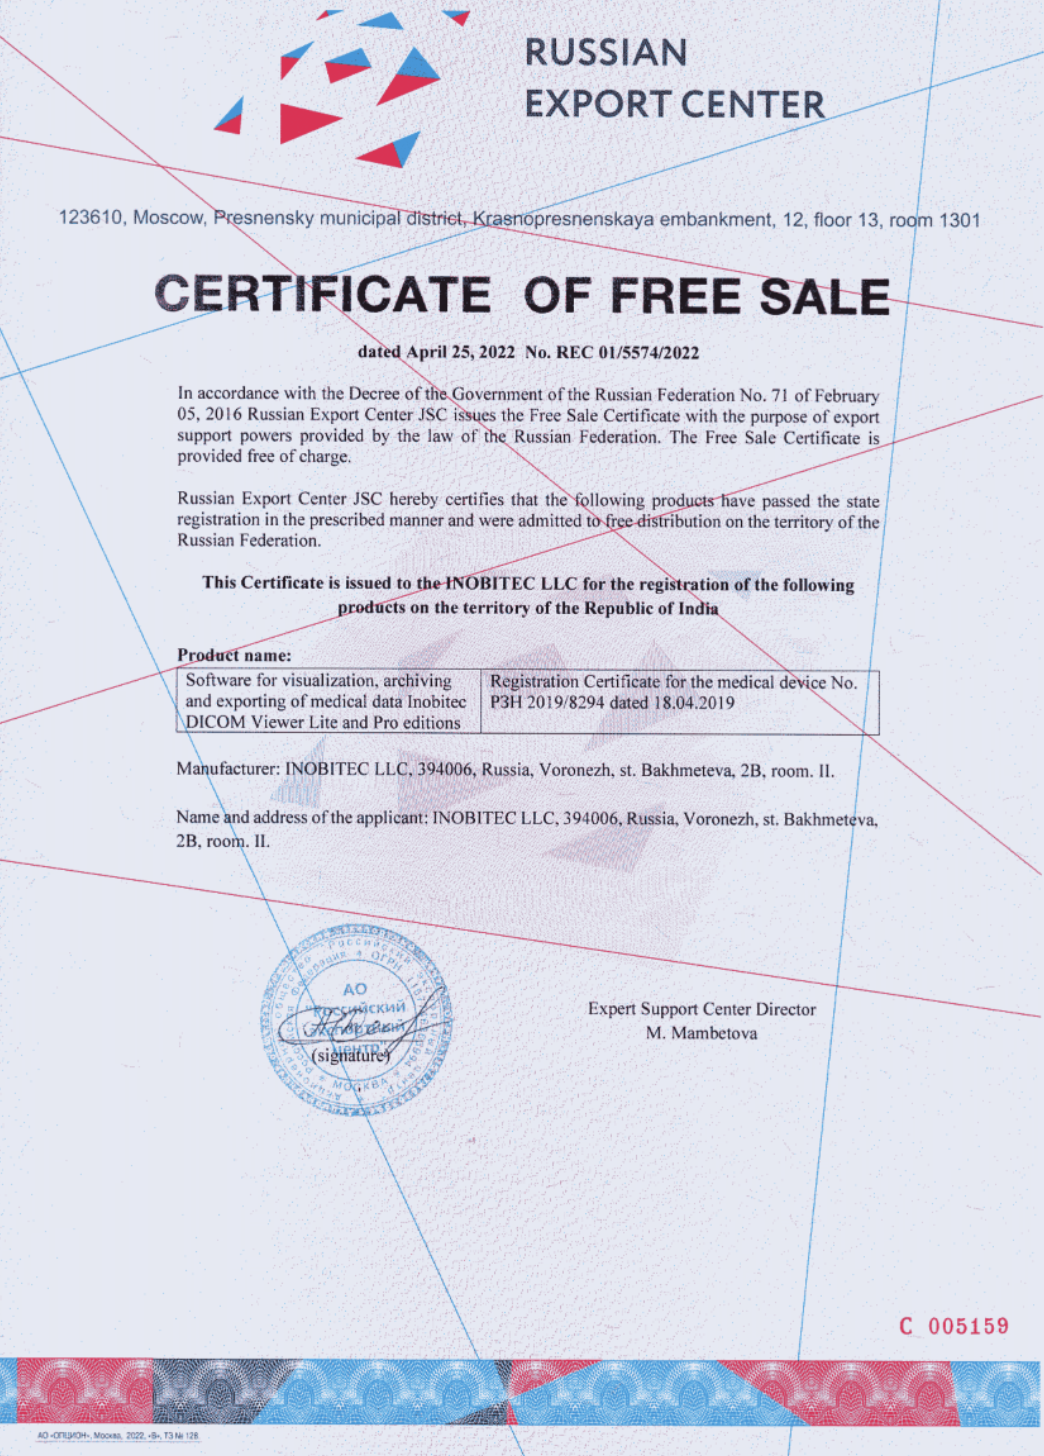 Certificate of free sale No. REC 01/5574/2022